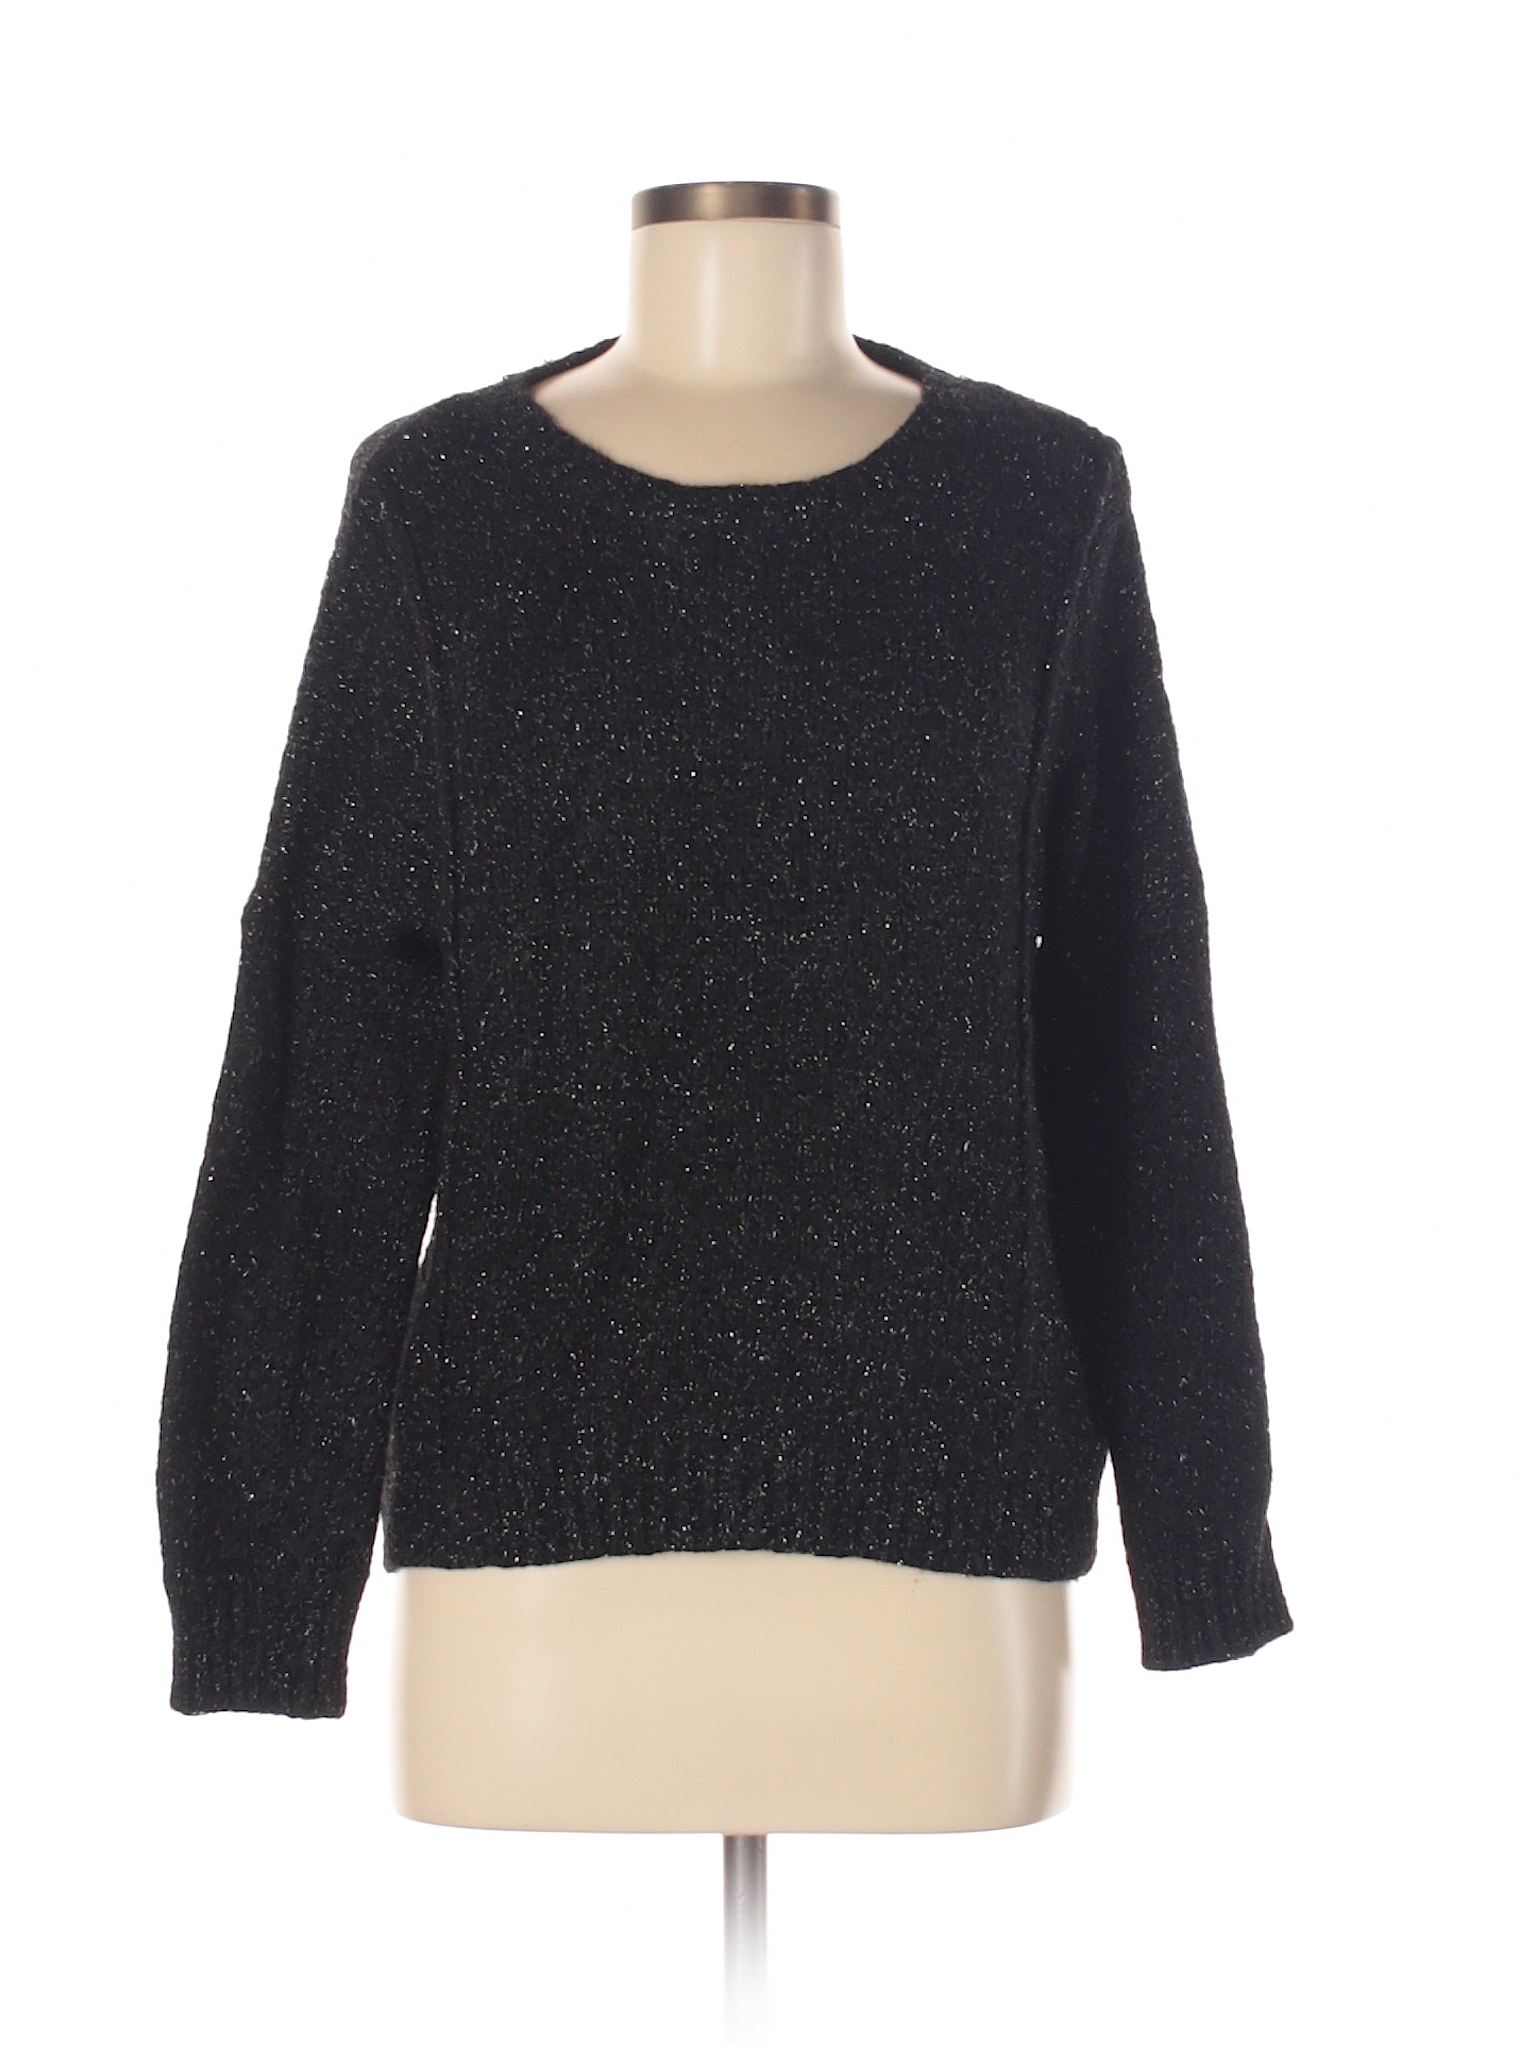 Jennifer Lopez Solid Black Pullover Sweater Size M - 70% off | thredUP